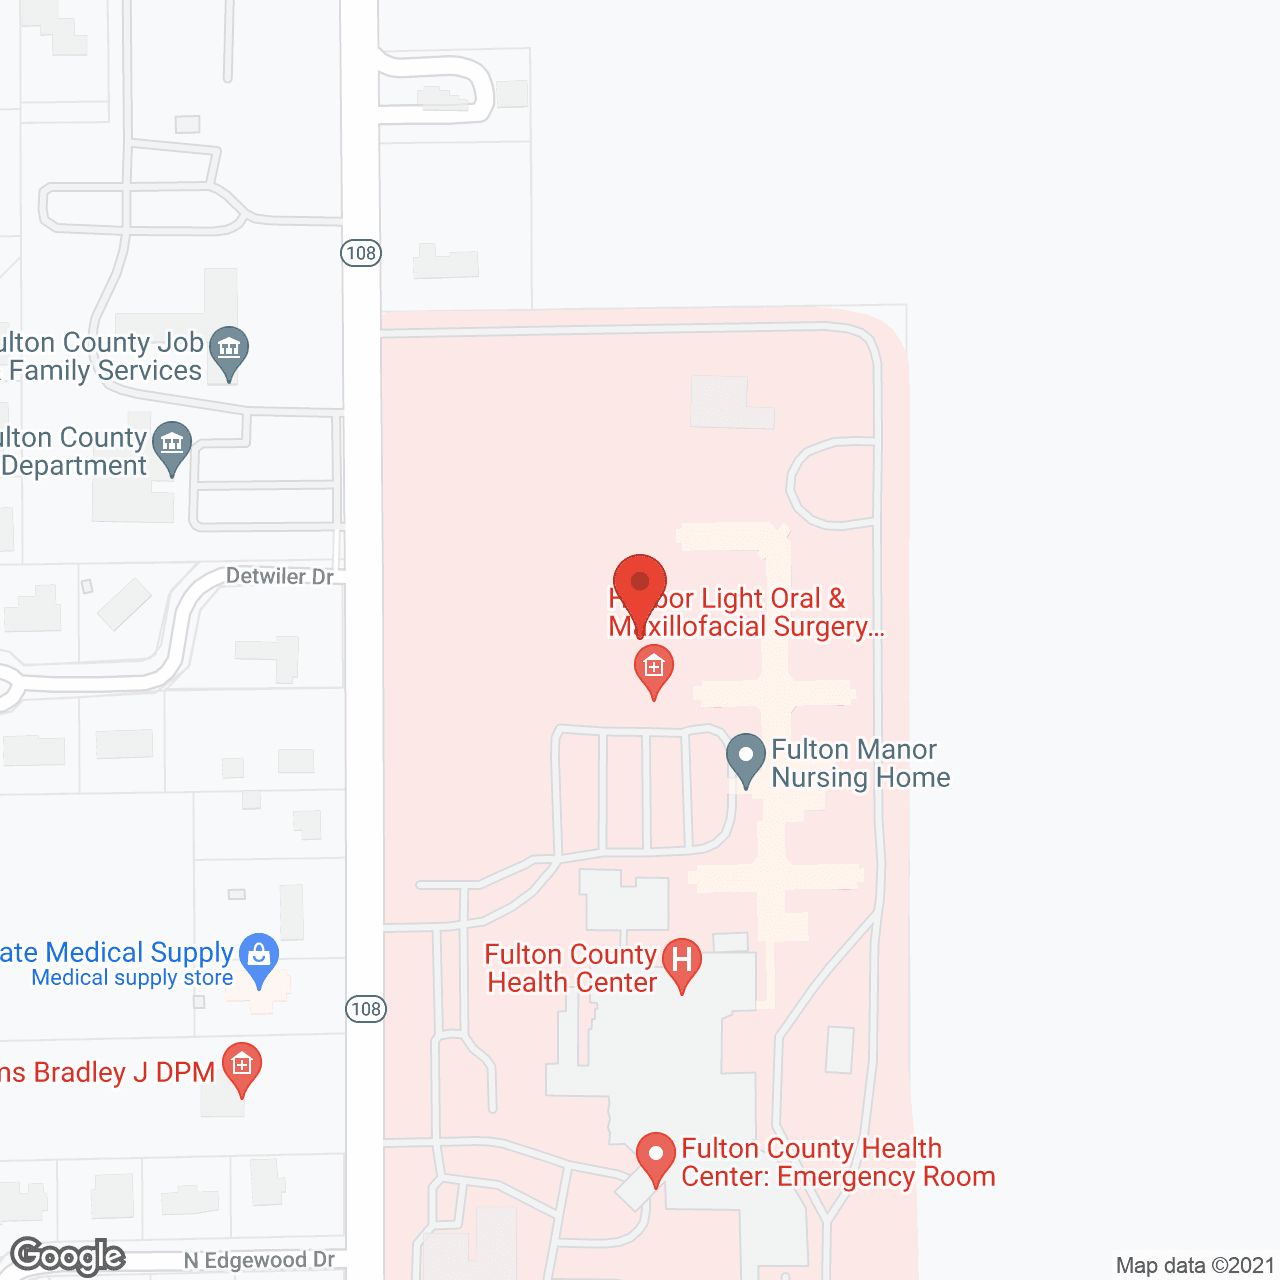 Fulton Manor Nursing Home in google map